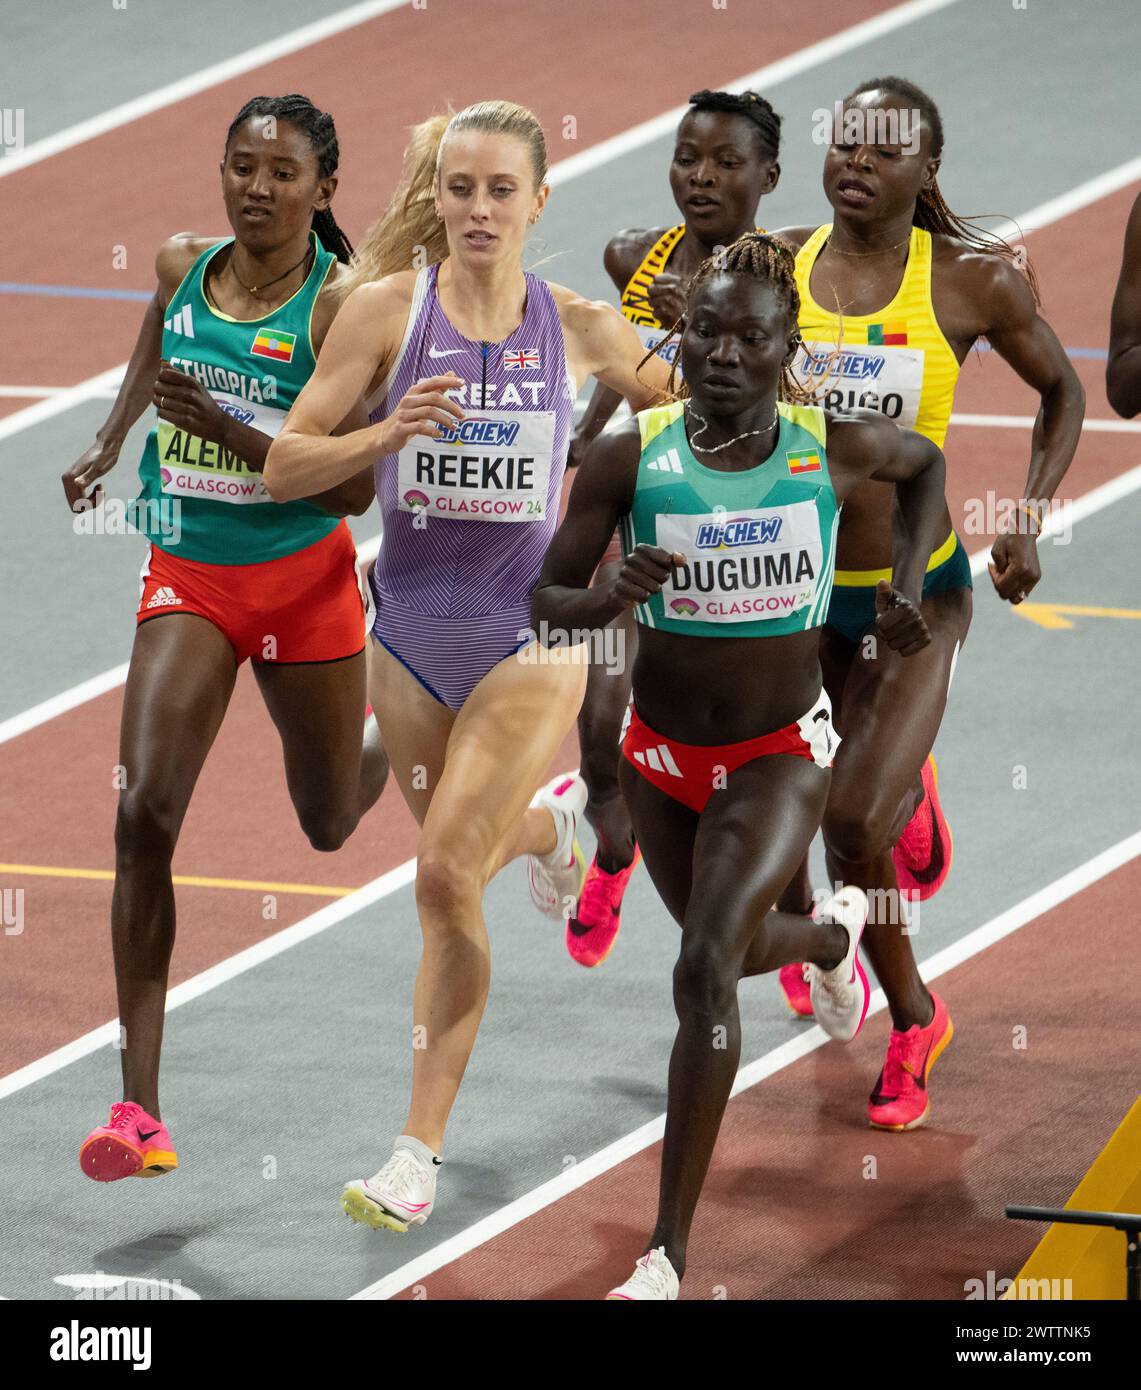 Habitam Alemu and Tsige Duguma of Ethiopia, Jemma Reekie of Great Britain competing in the women’s 800m final at the World Athletics Indoor Championsh Stock Photo